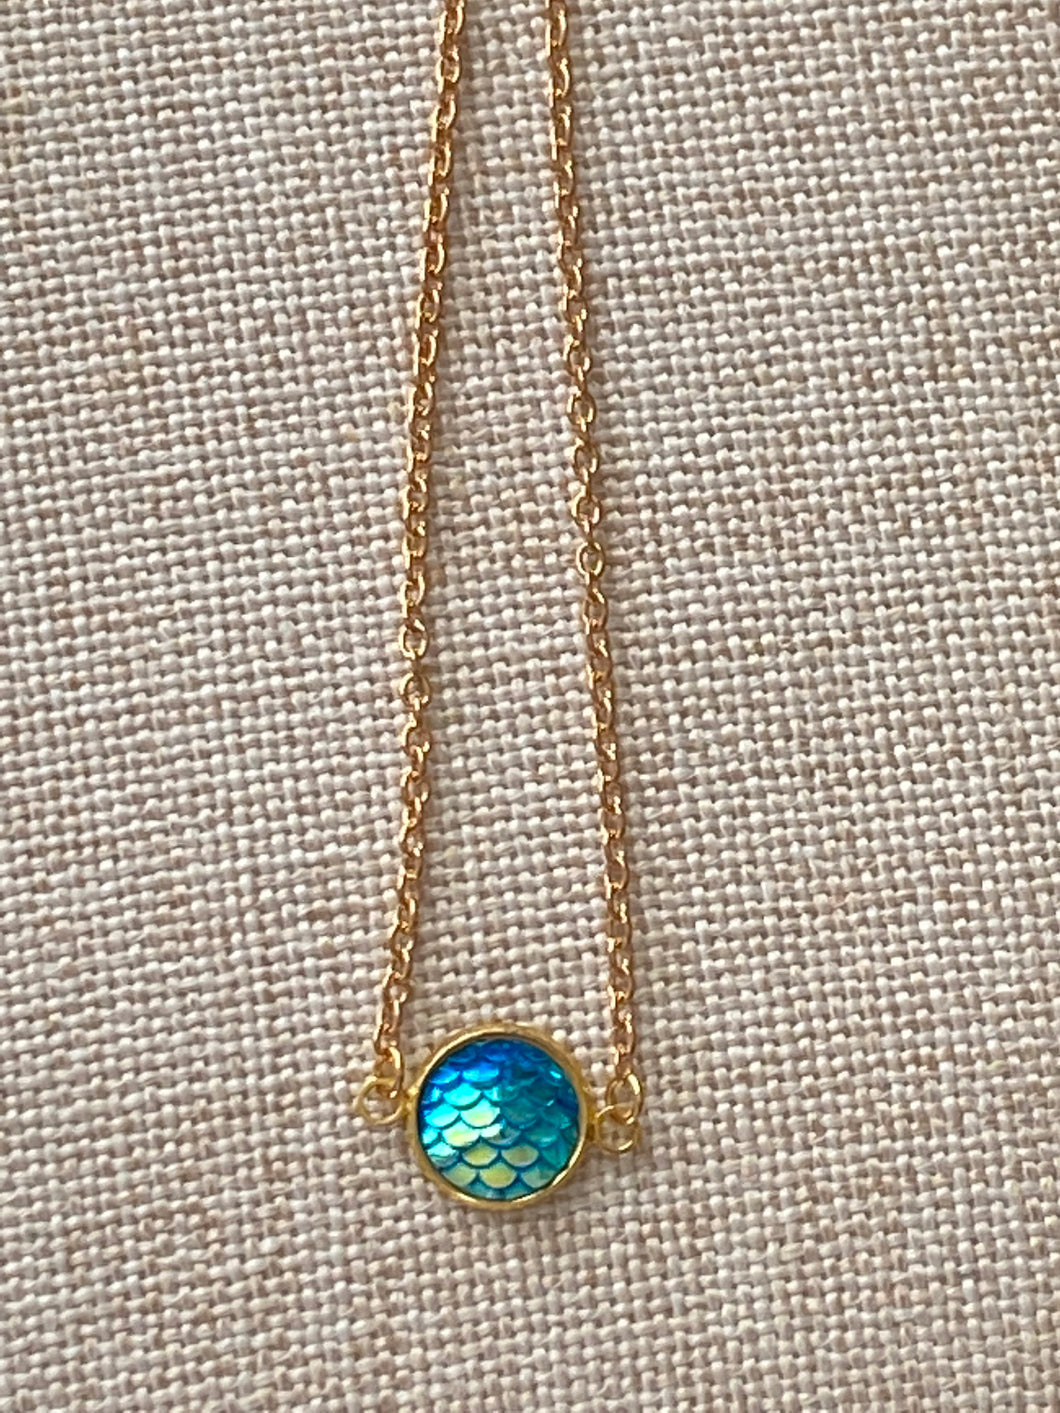 Mermaid Shell pendant necklace Pendant Necklace